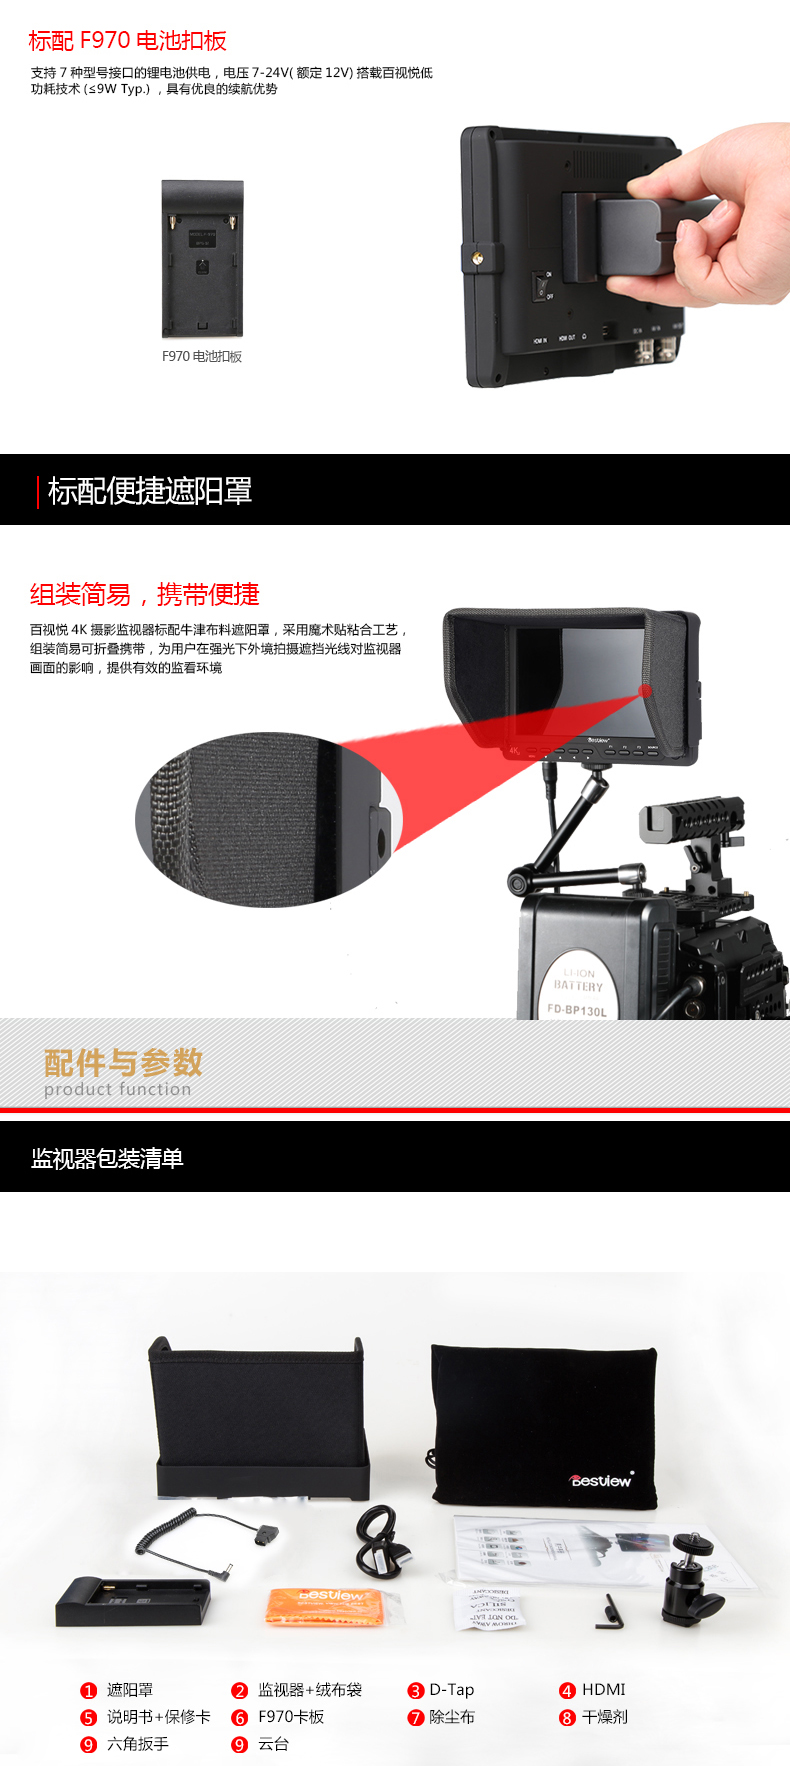 S7II_小尺寸摄影监视器